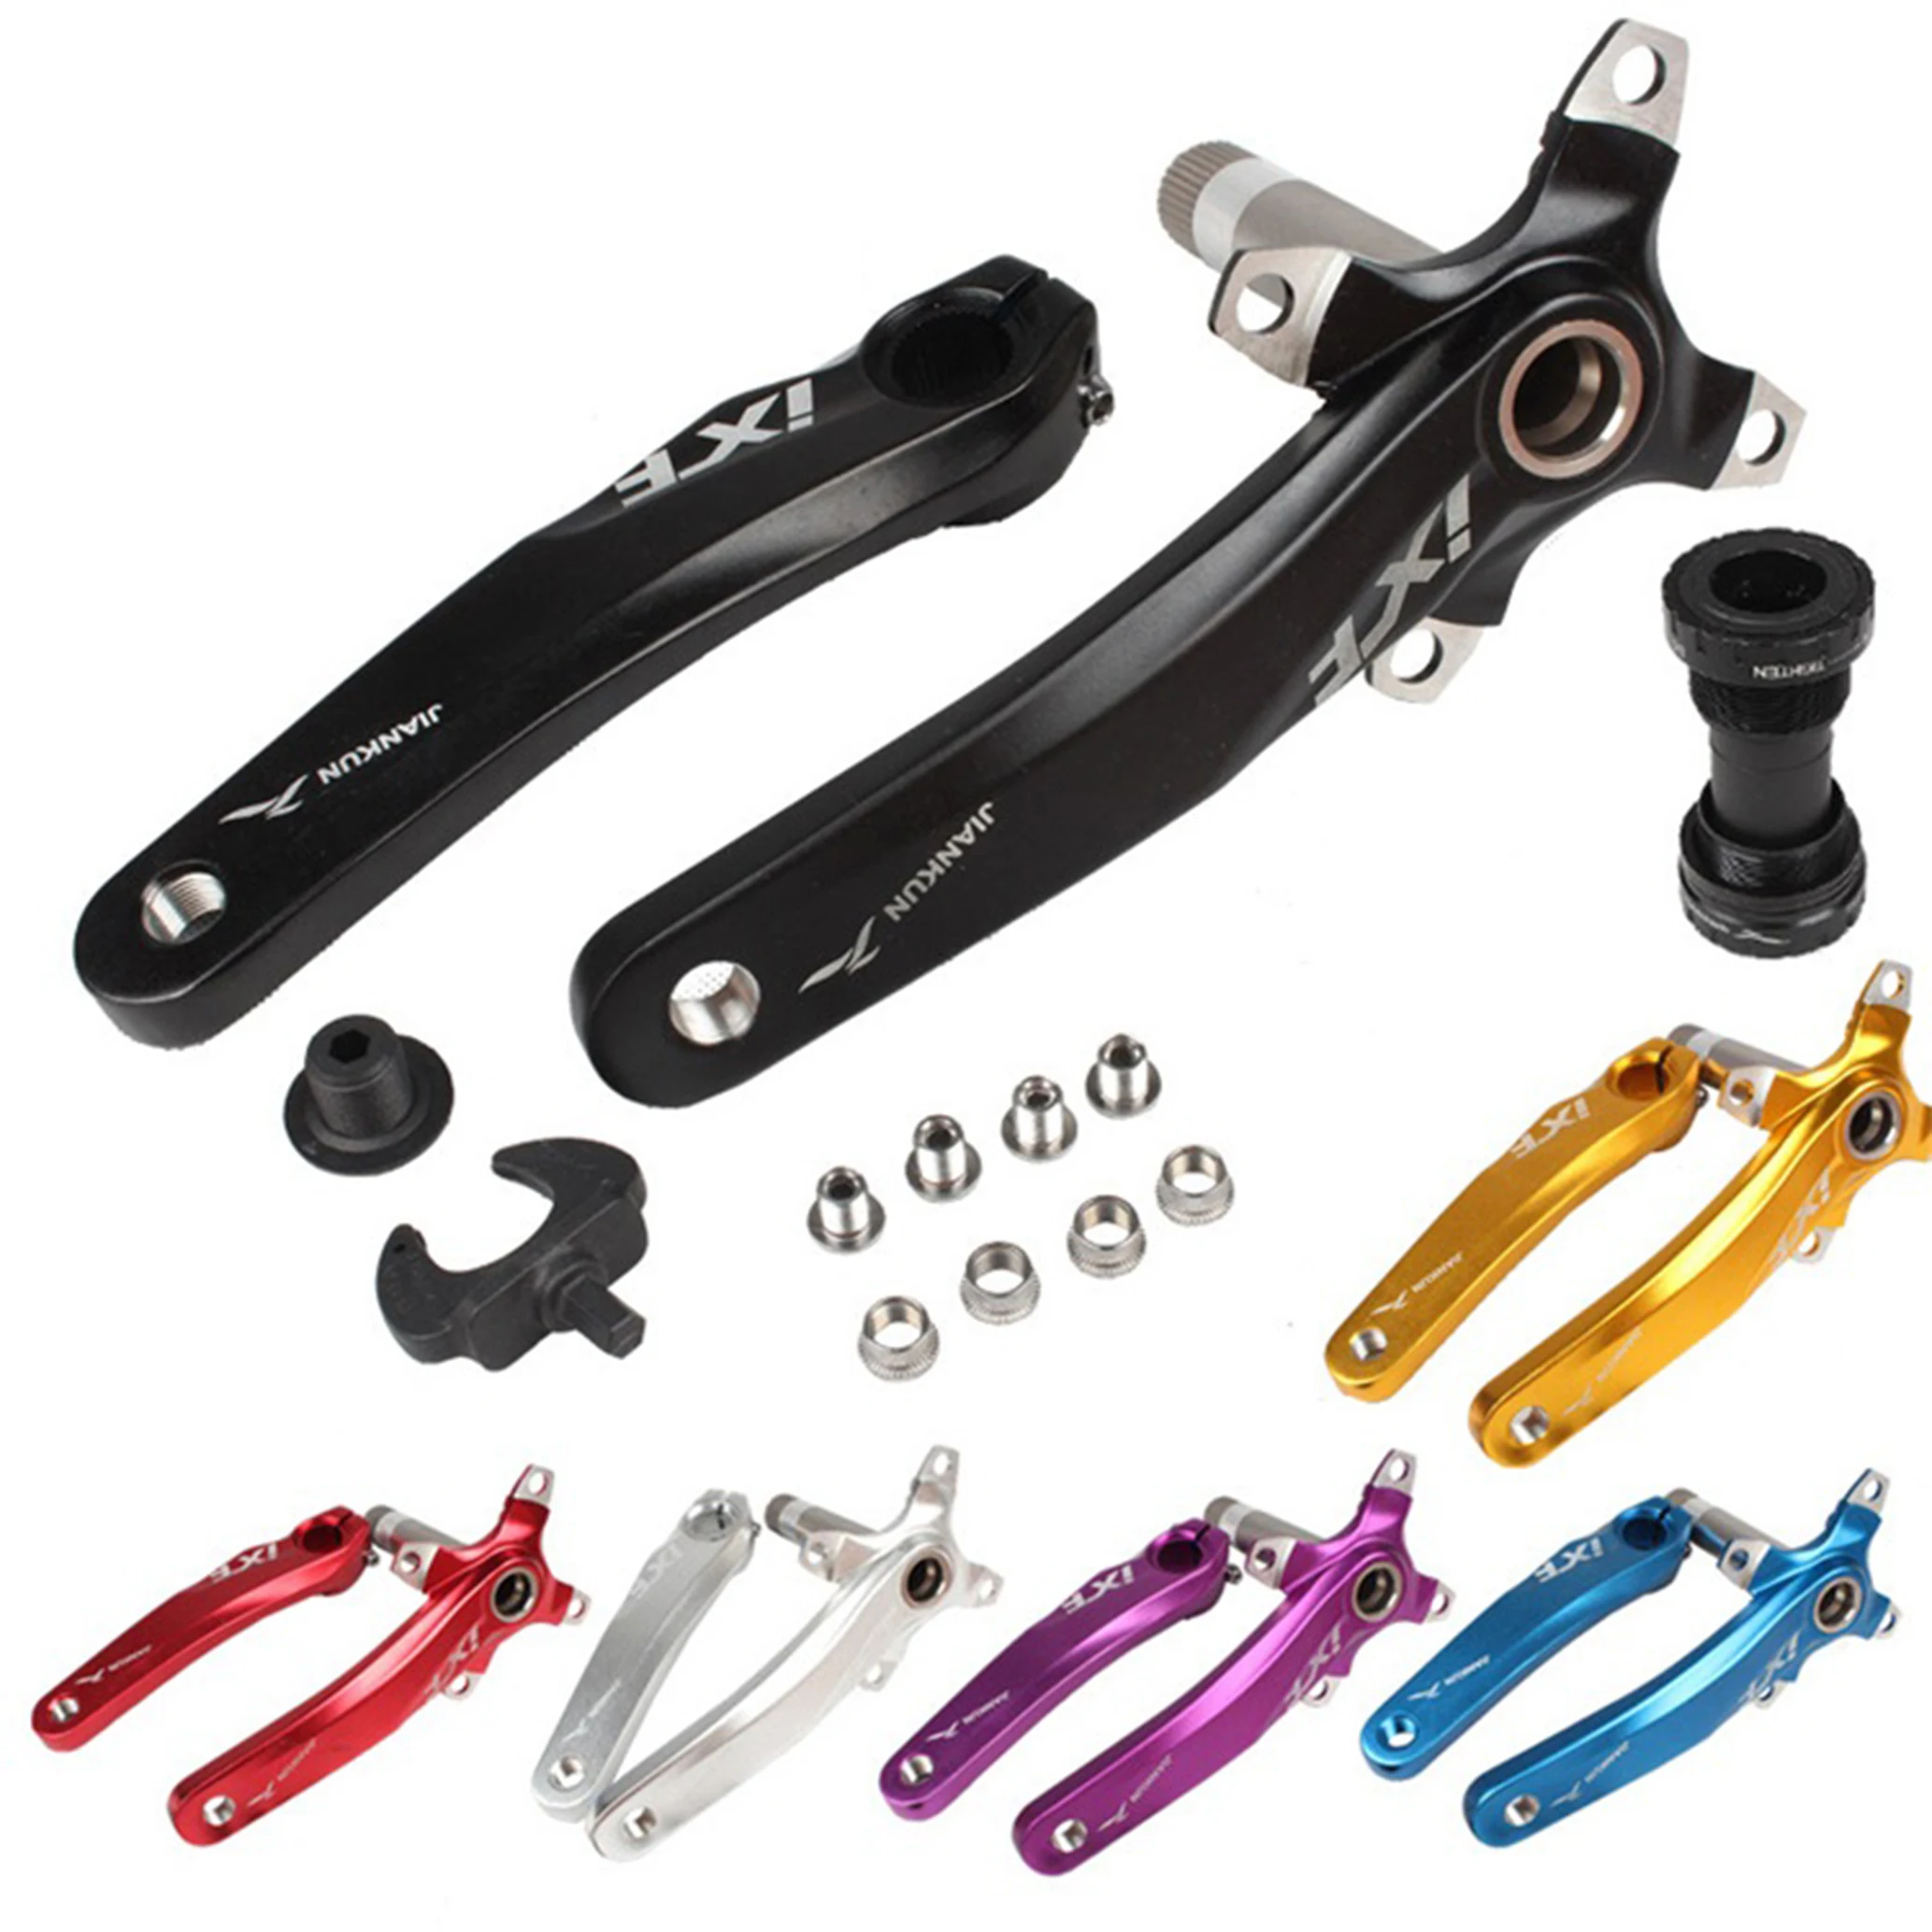 

Wholesale IXF 104 BCD CNC Crank Arm Crankset Hollowtech Bicycle Crankset with BB for MTB Road Bike, Multicolor